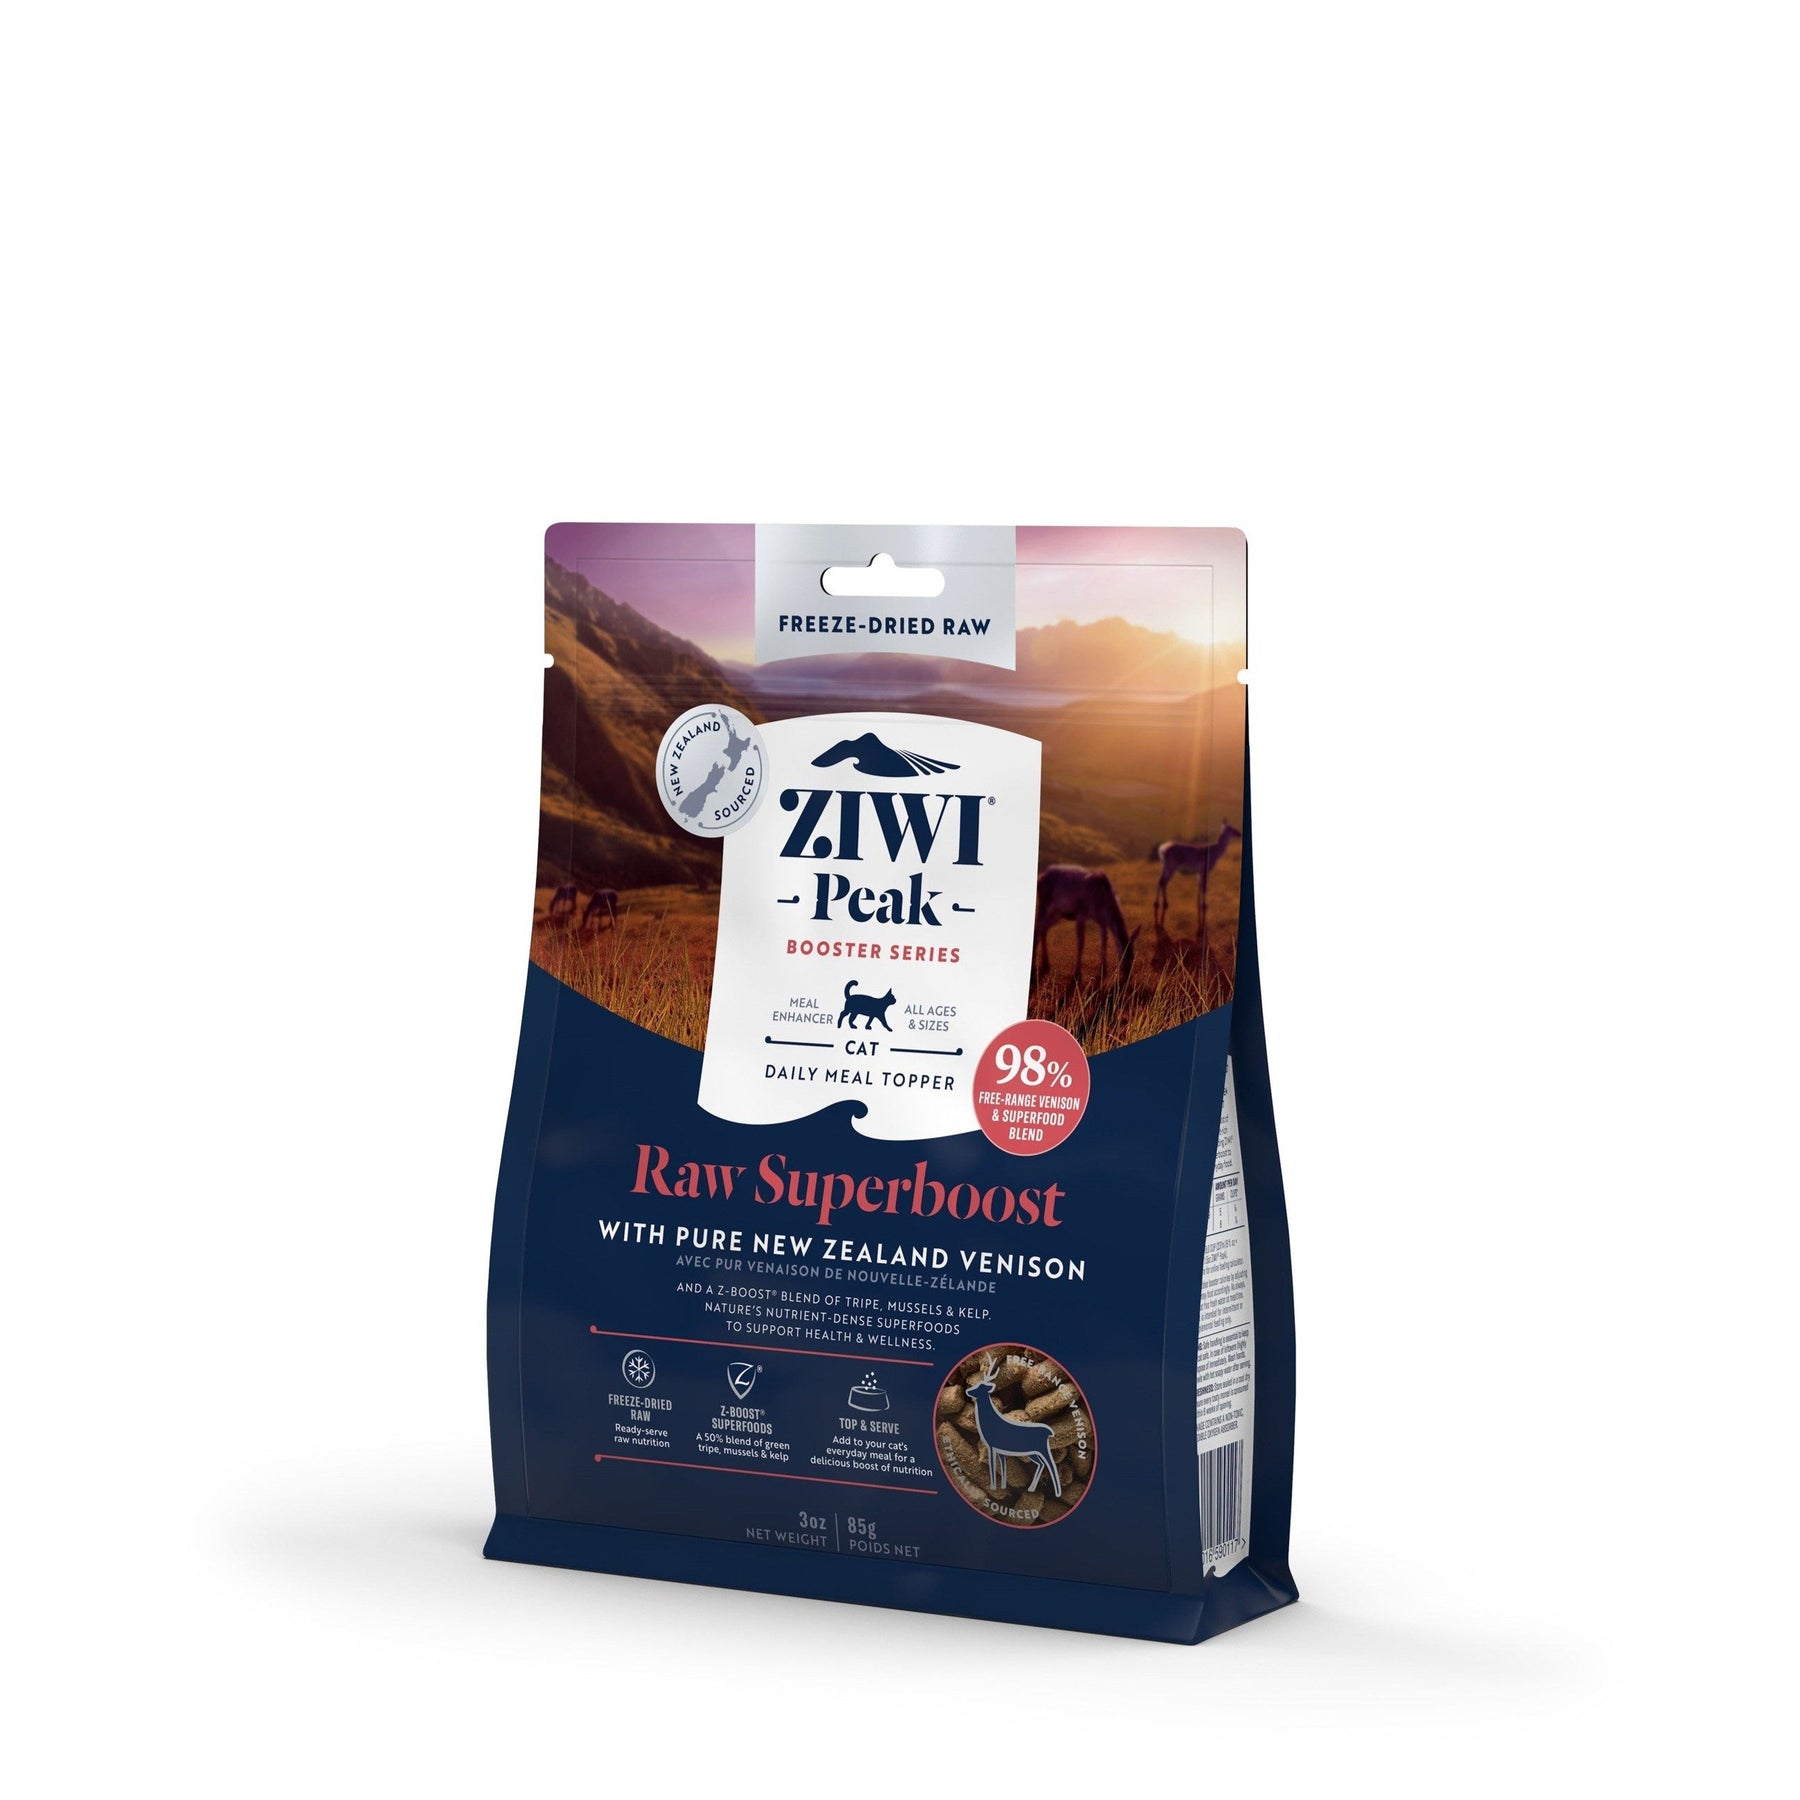 Ziwi Peak Freeze-Dried Raw Superboost with Pure NZ Venison, Cat